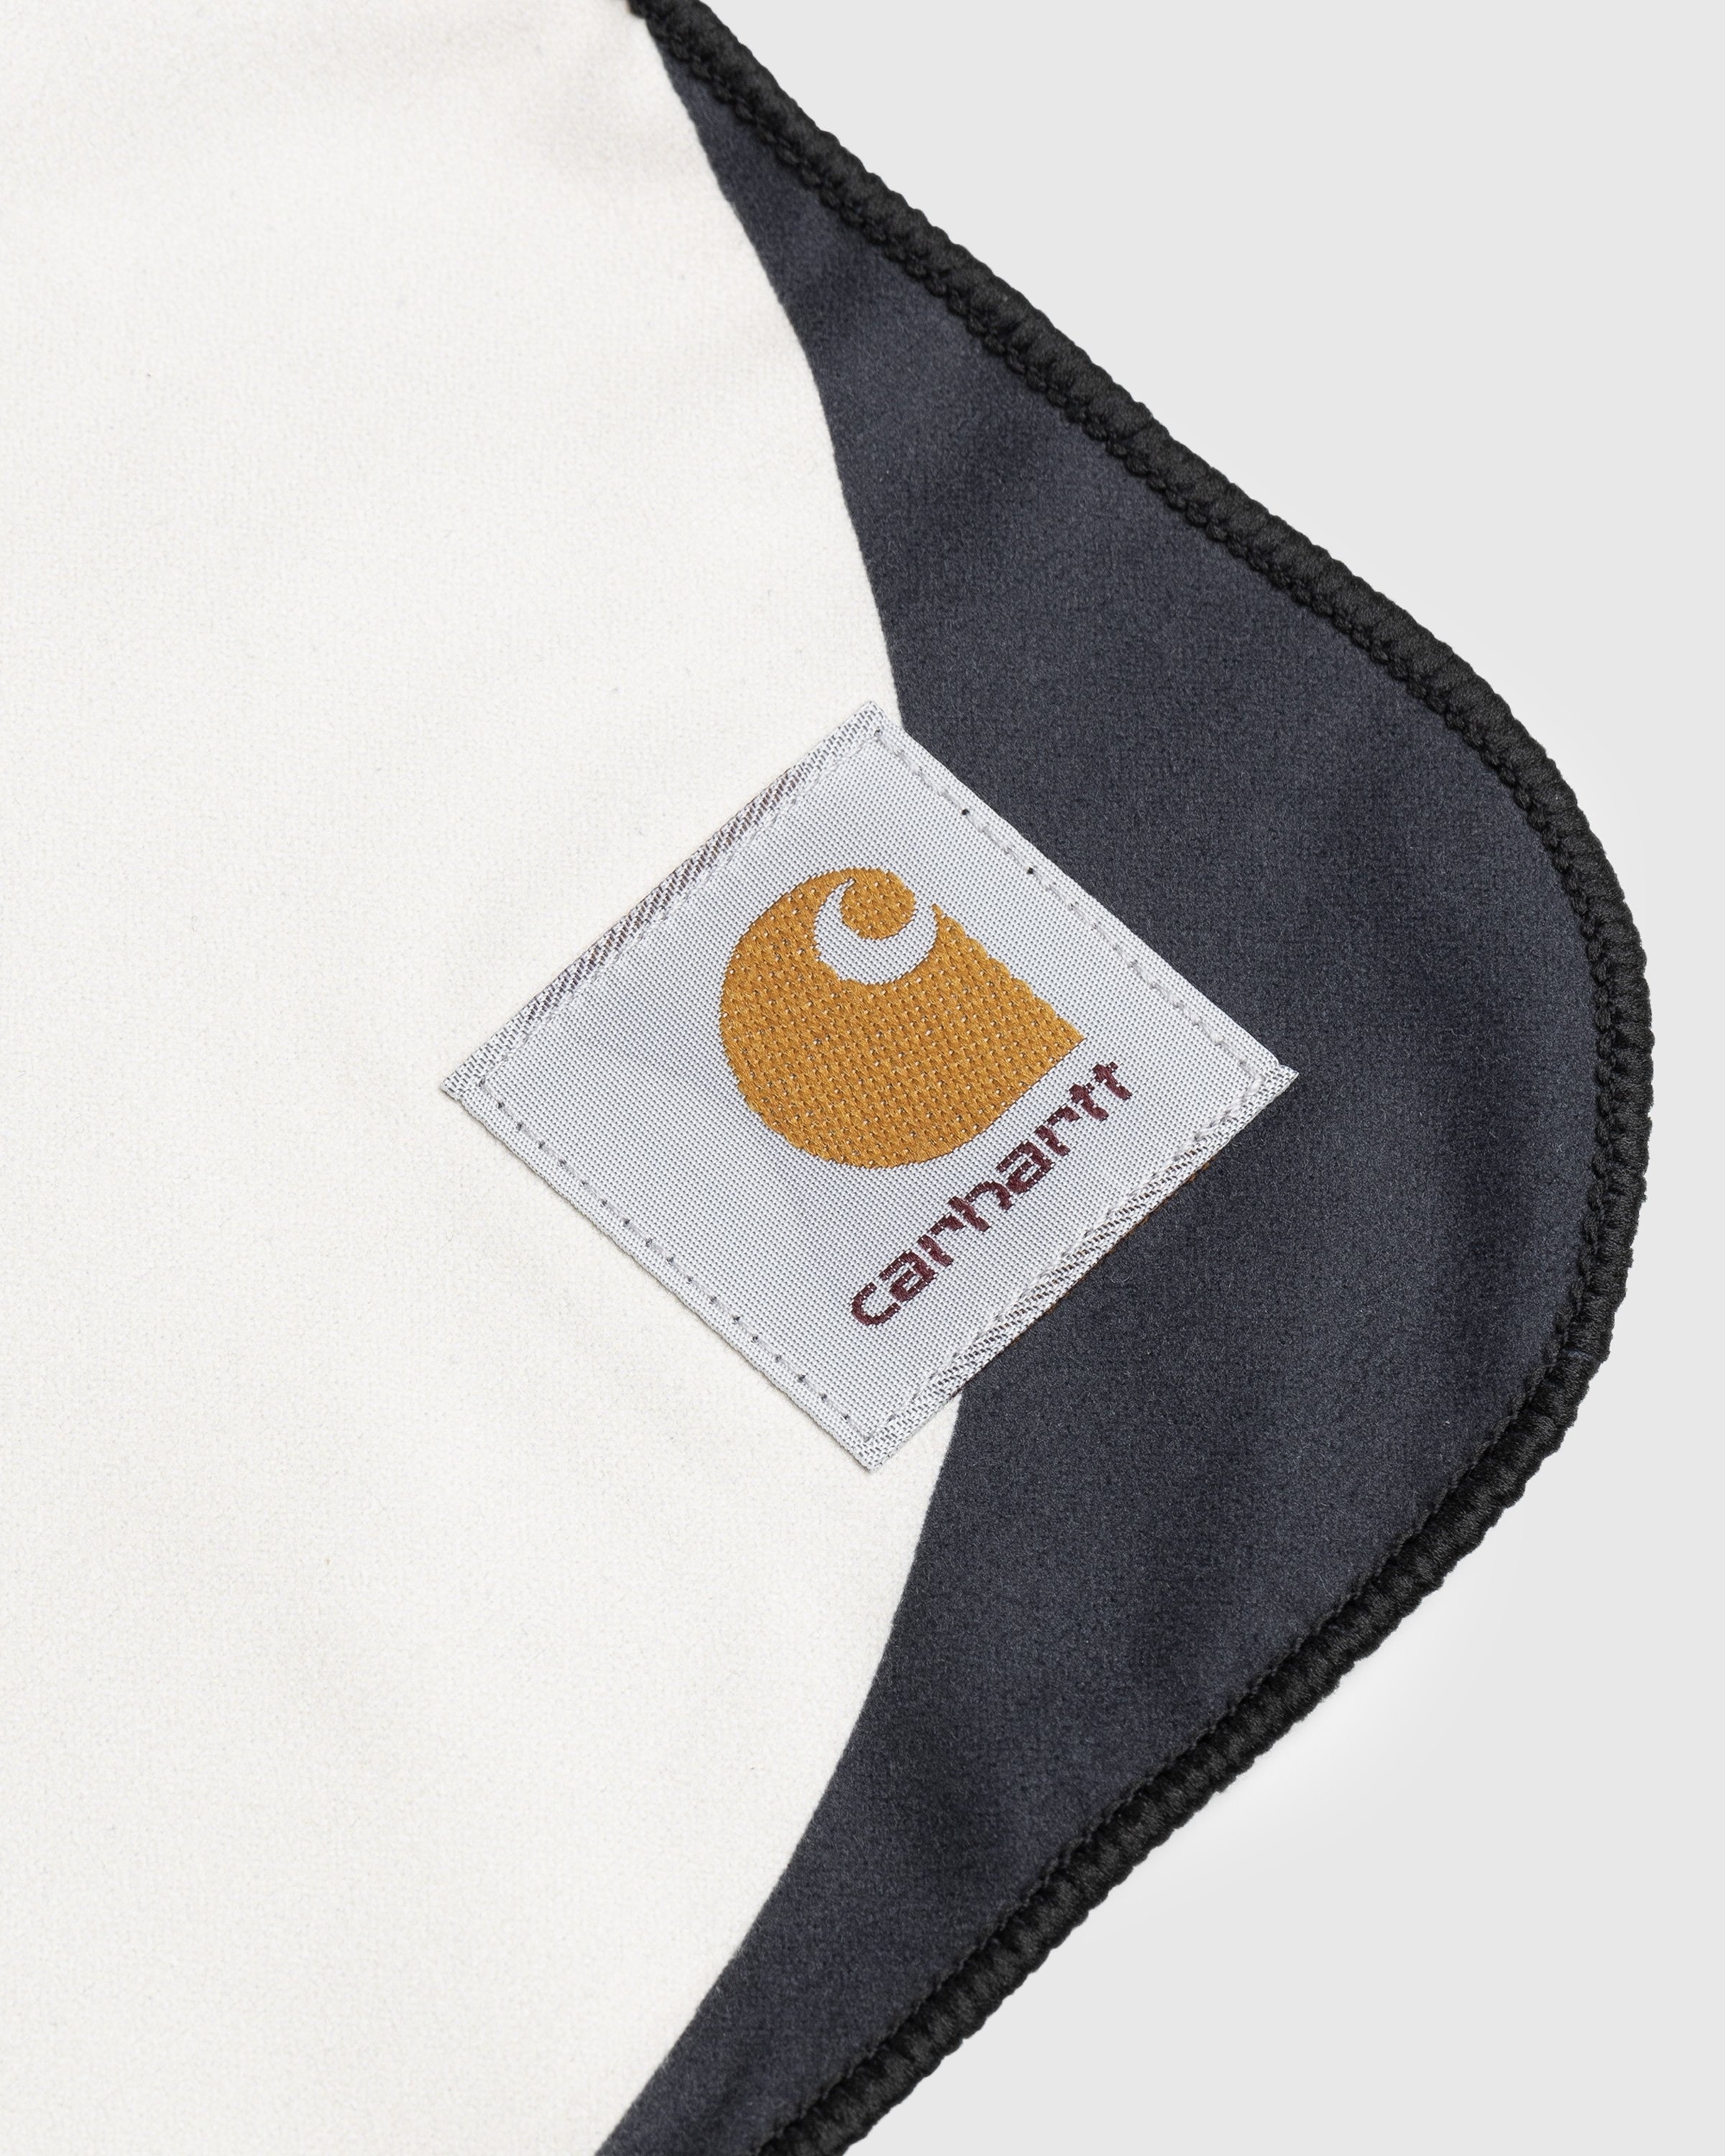 Carhartt WIP – Tamas Packable Towel Multi - Towels - Multi - Image 4